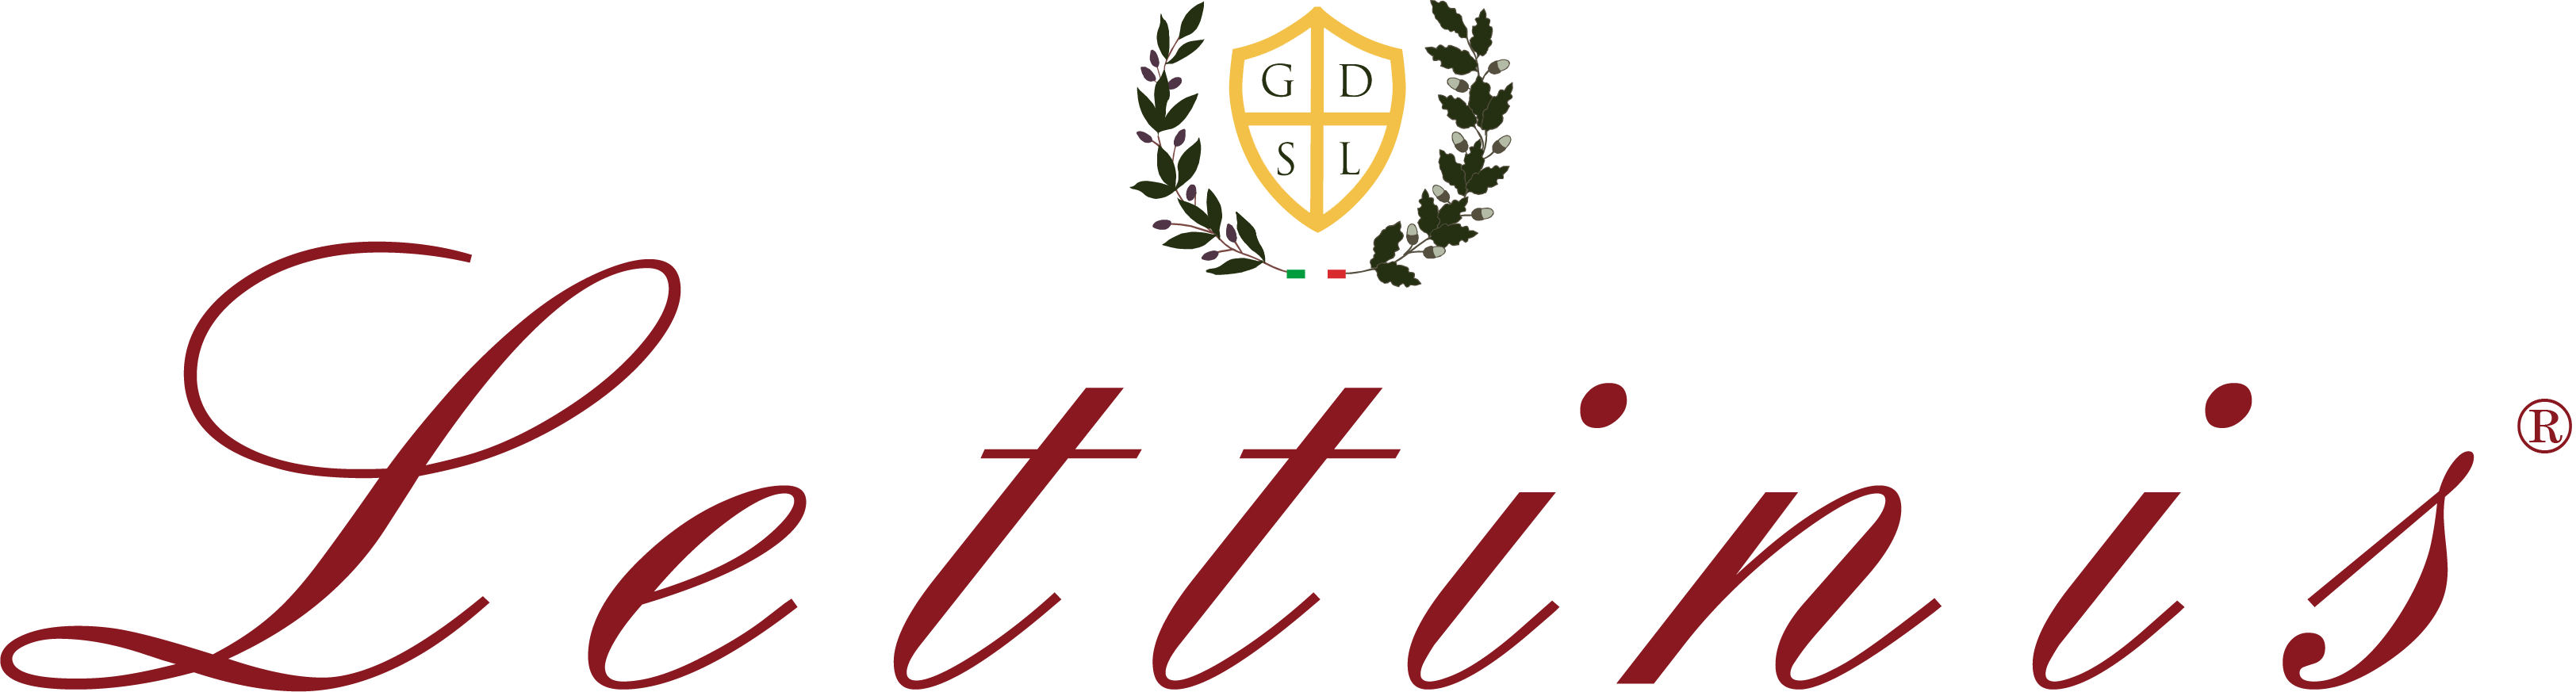 lettinis_Logo.png